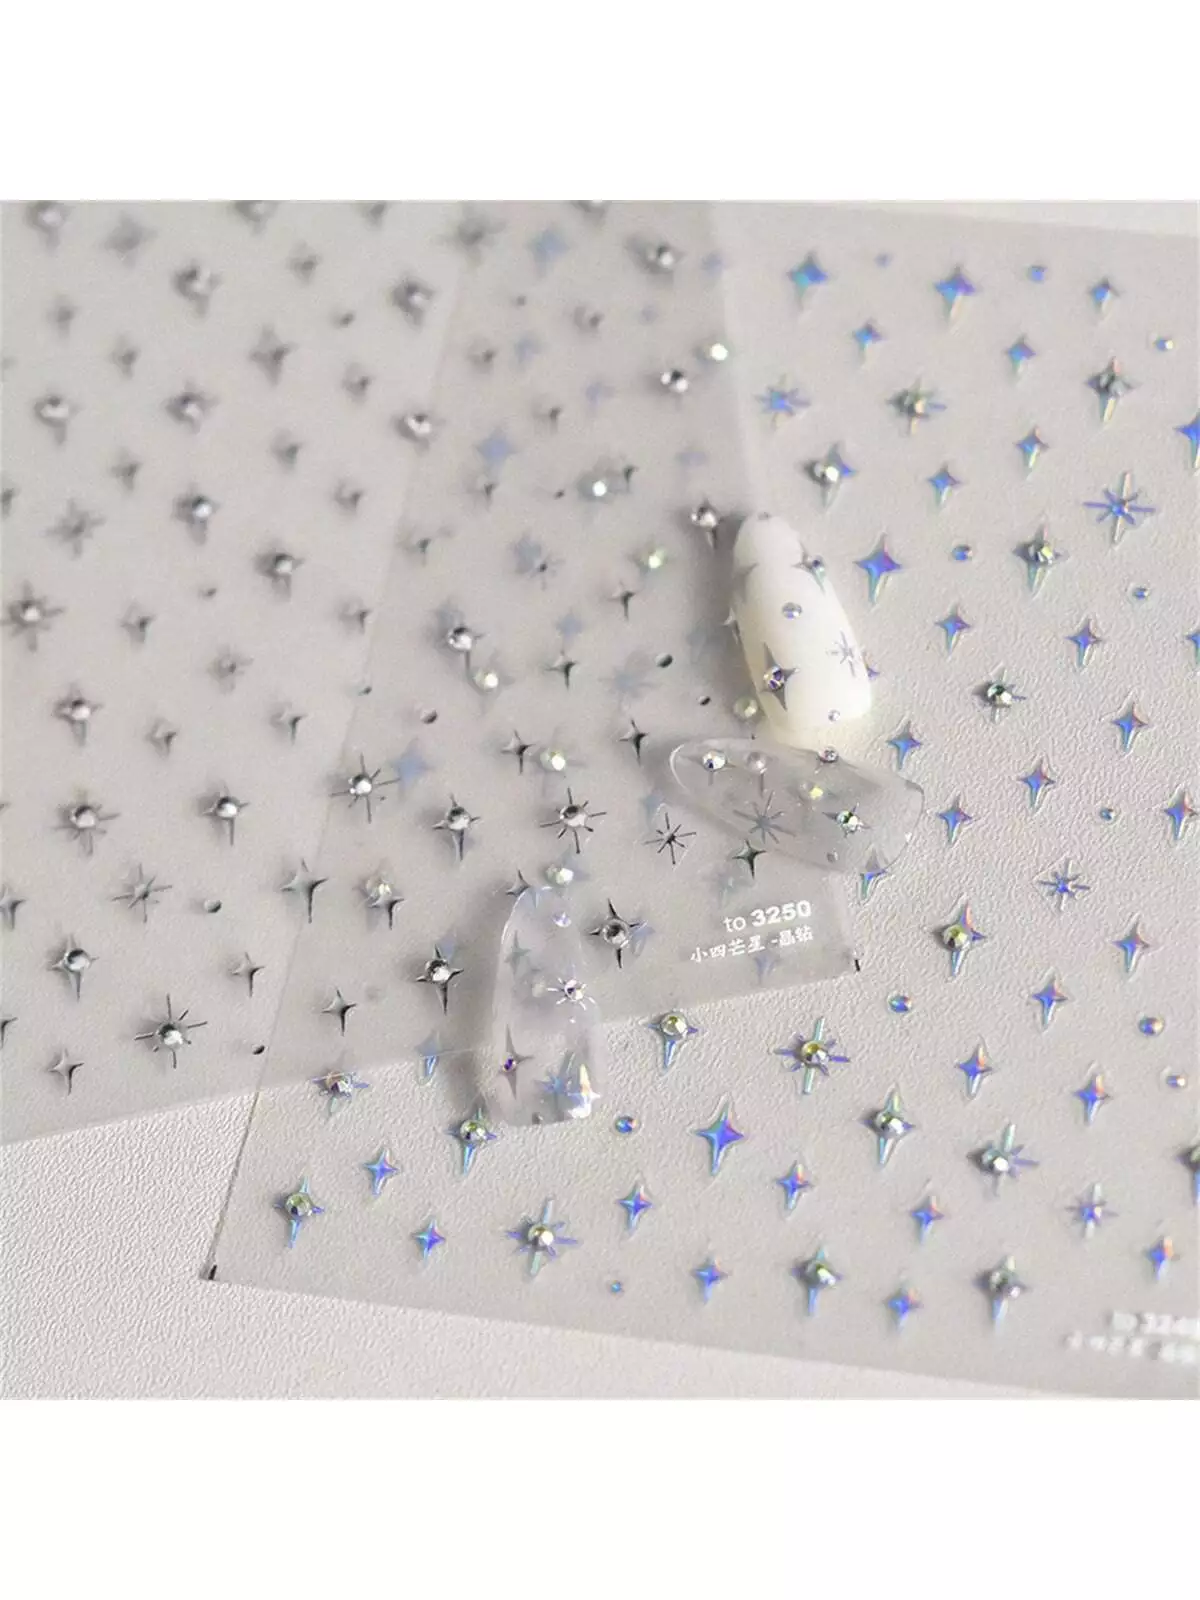 1 sheet Rhinestones Star Nail Art Stickers Laser Silver Self Adhesive Cute - $15.83